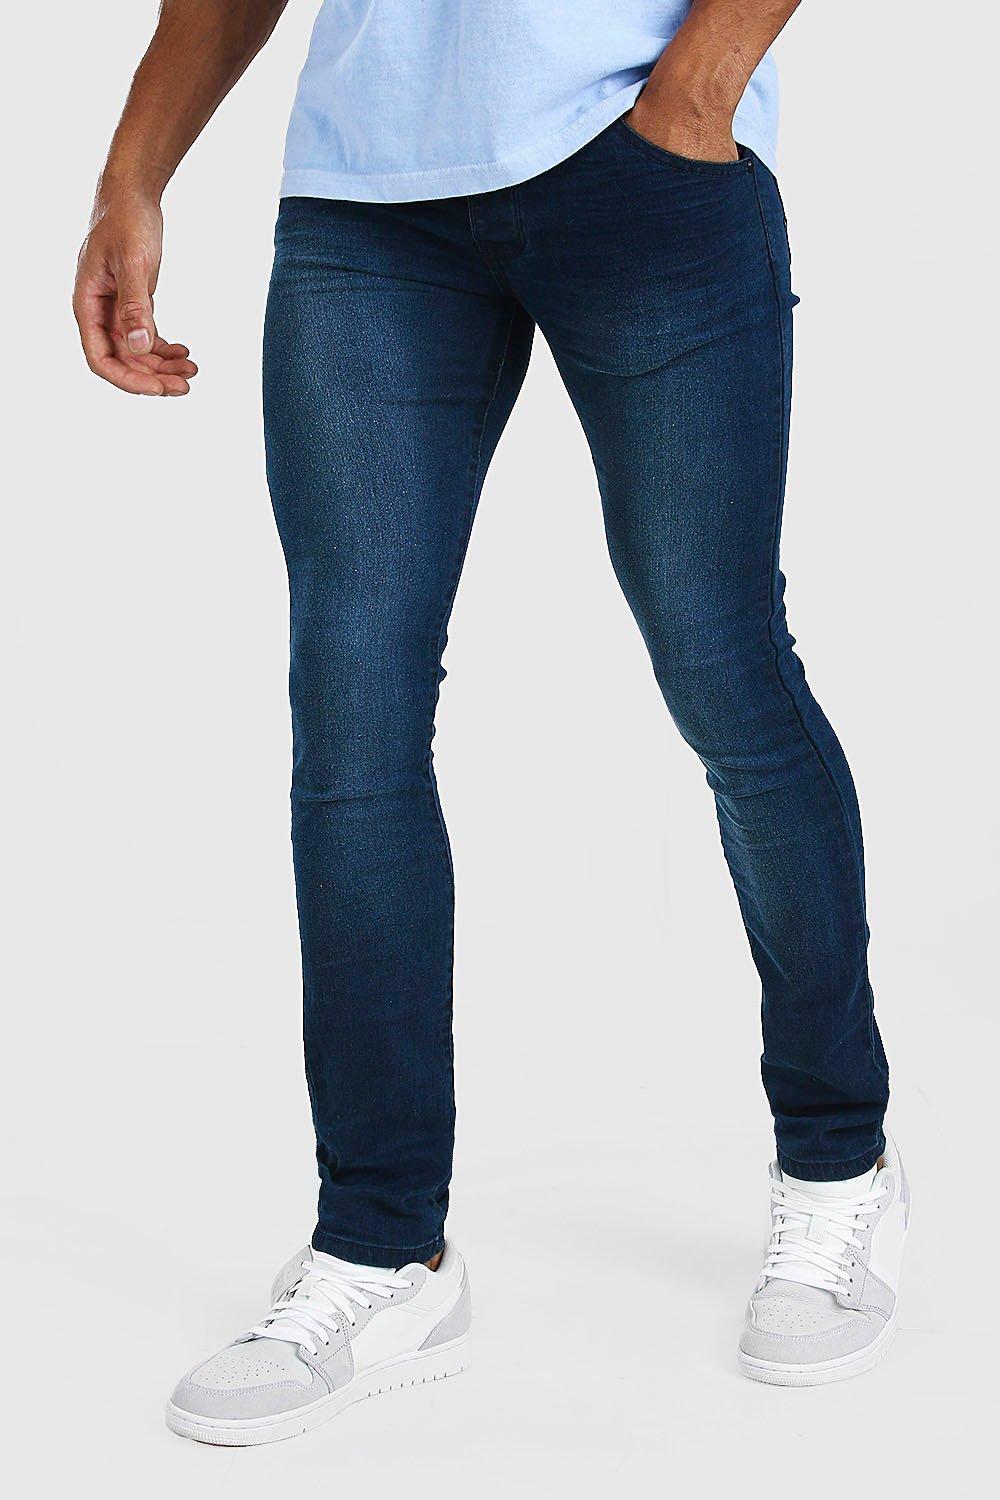 dark blue skinny stretch jeans